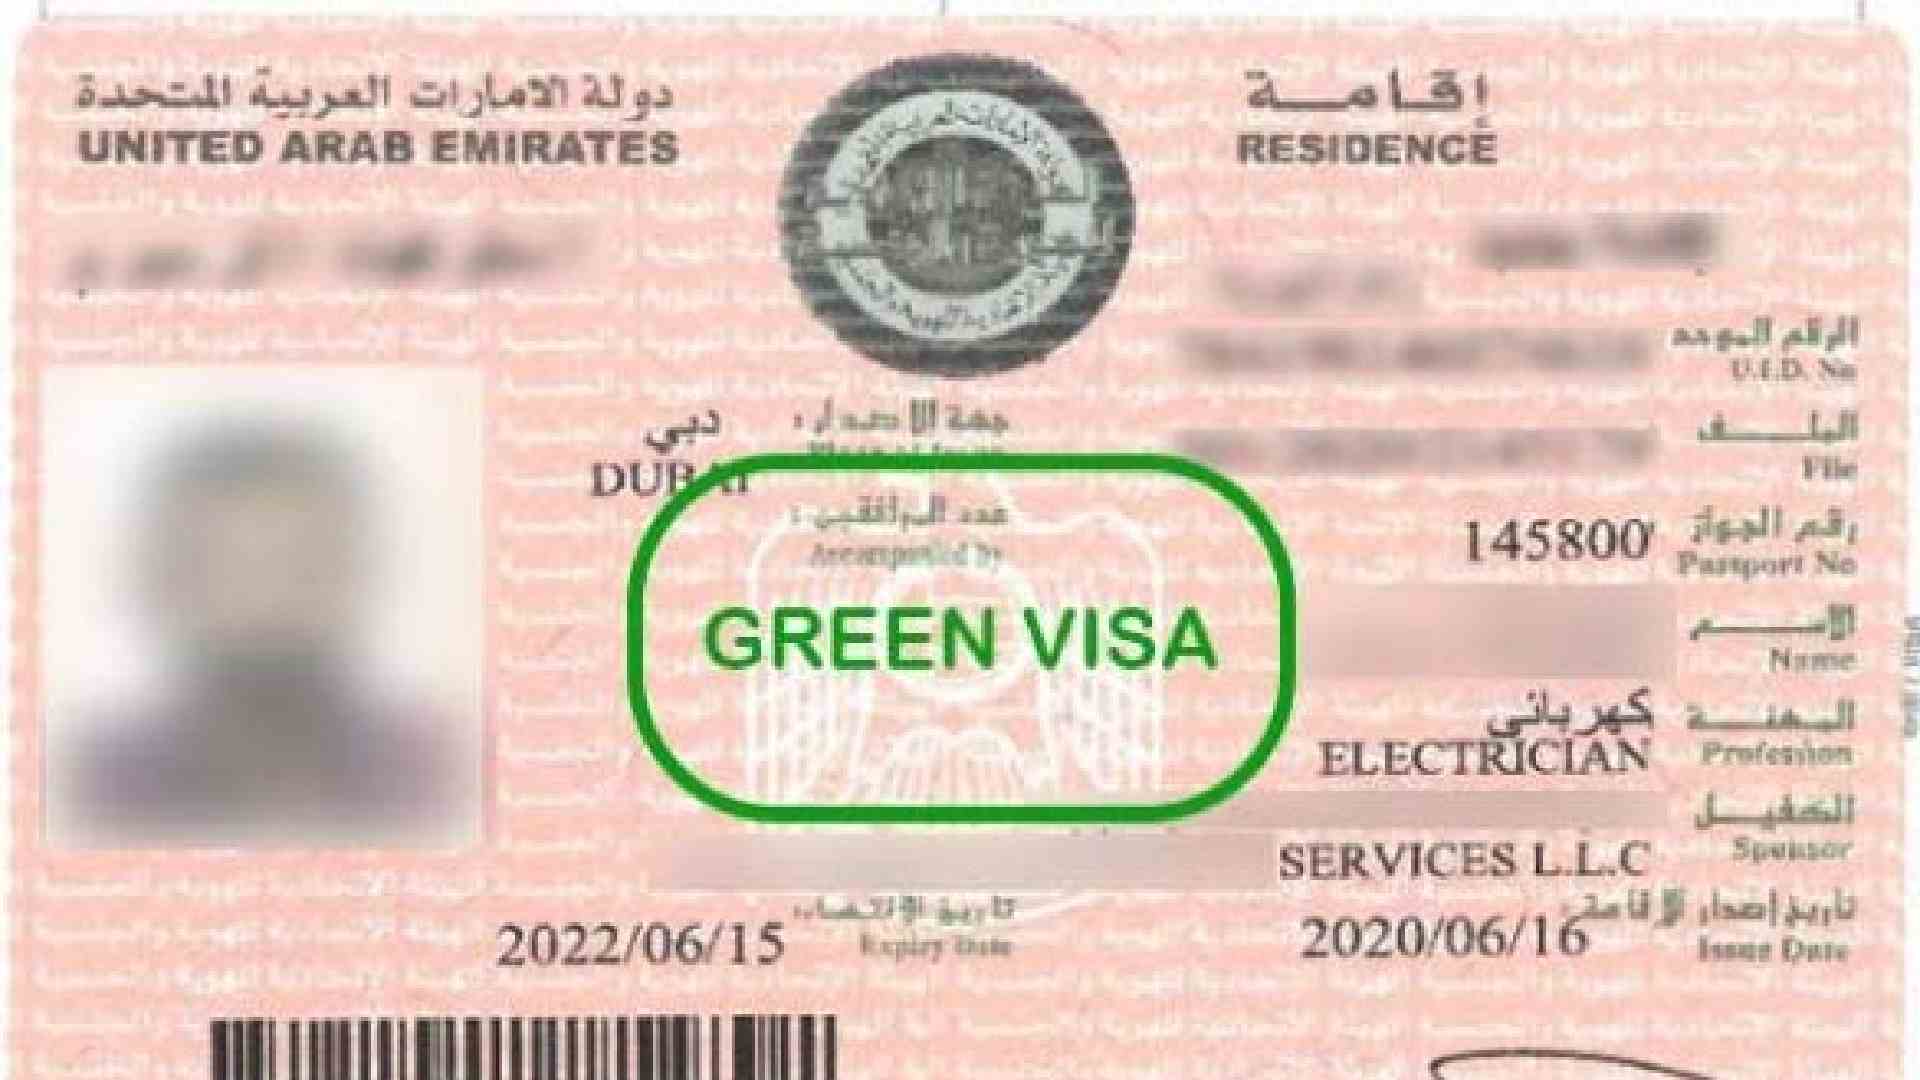 Differences between UAE's Green Visa and Golden Visa